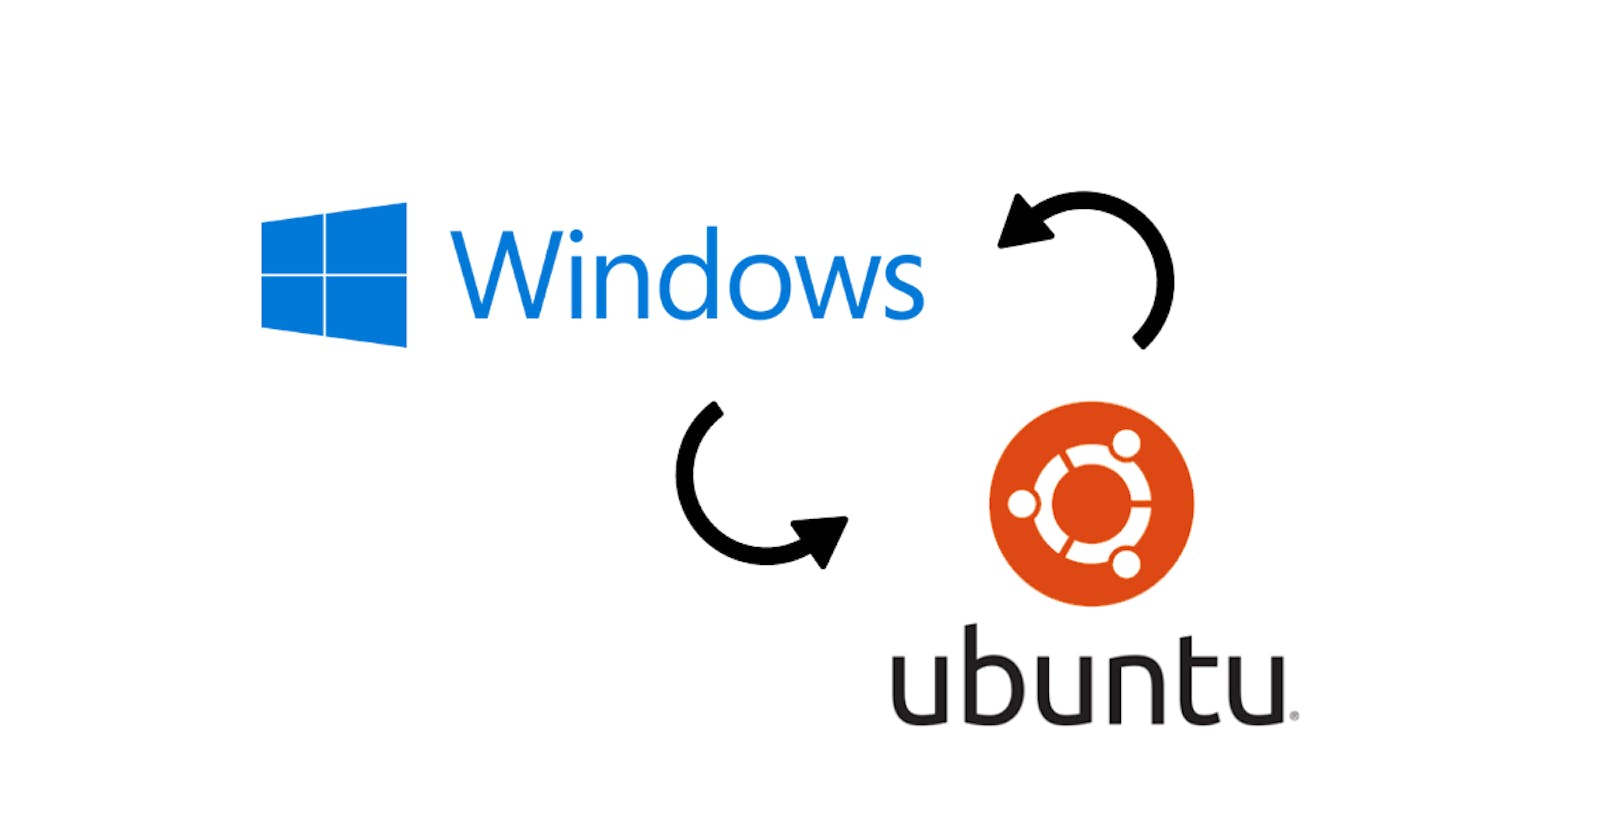 Running an Ubuntu terminal on Windows OS: WSL-2